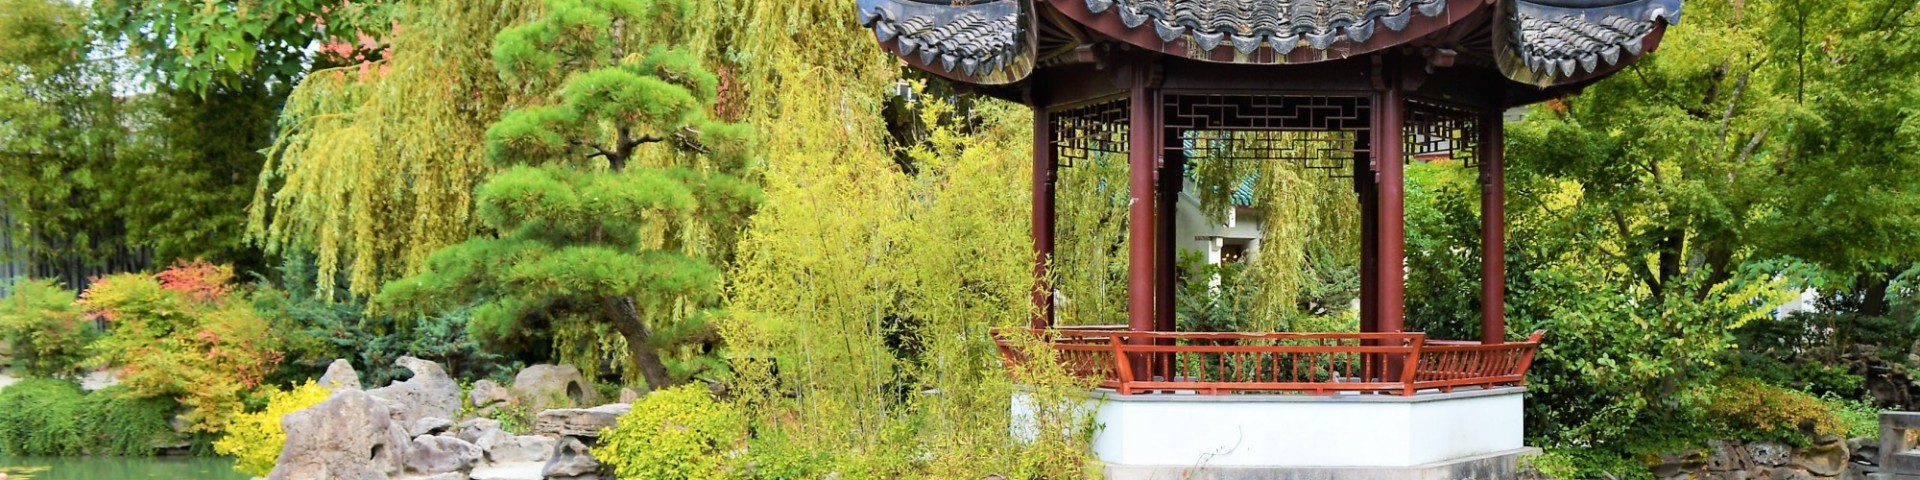 Dr. Sun Yat-Sen Classical Chinese Garden Vancouver